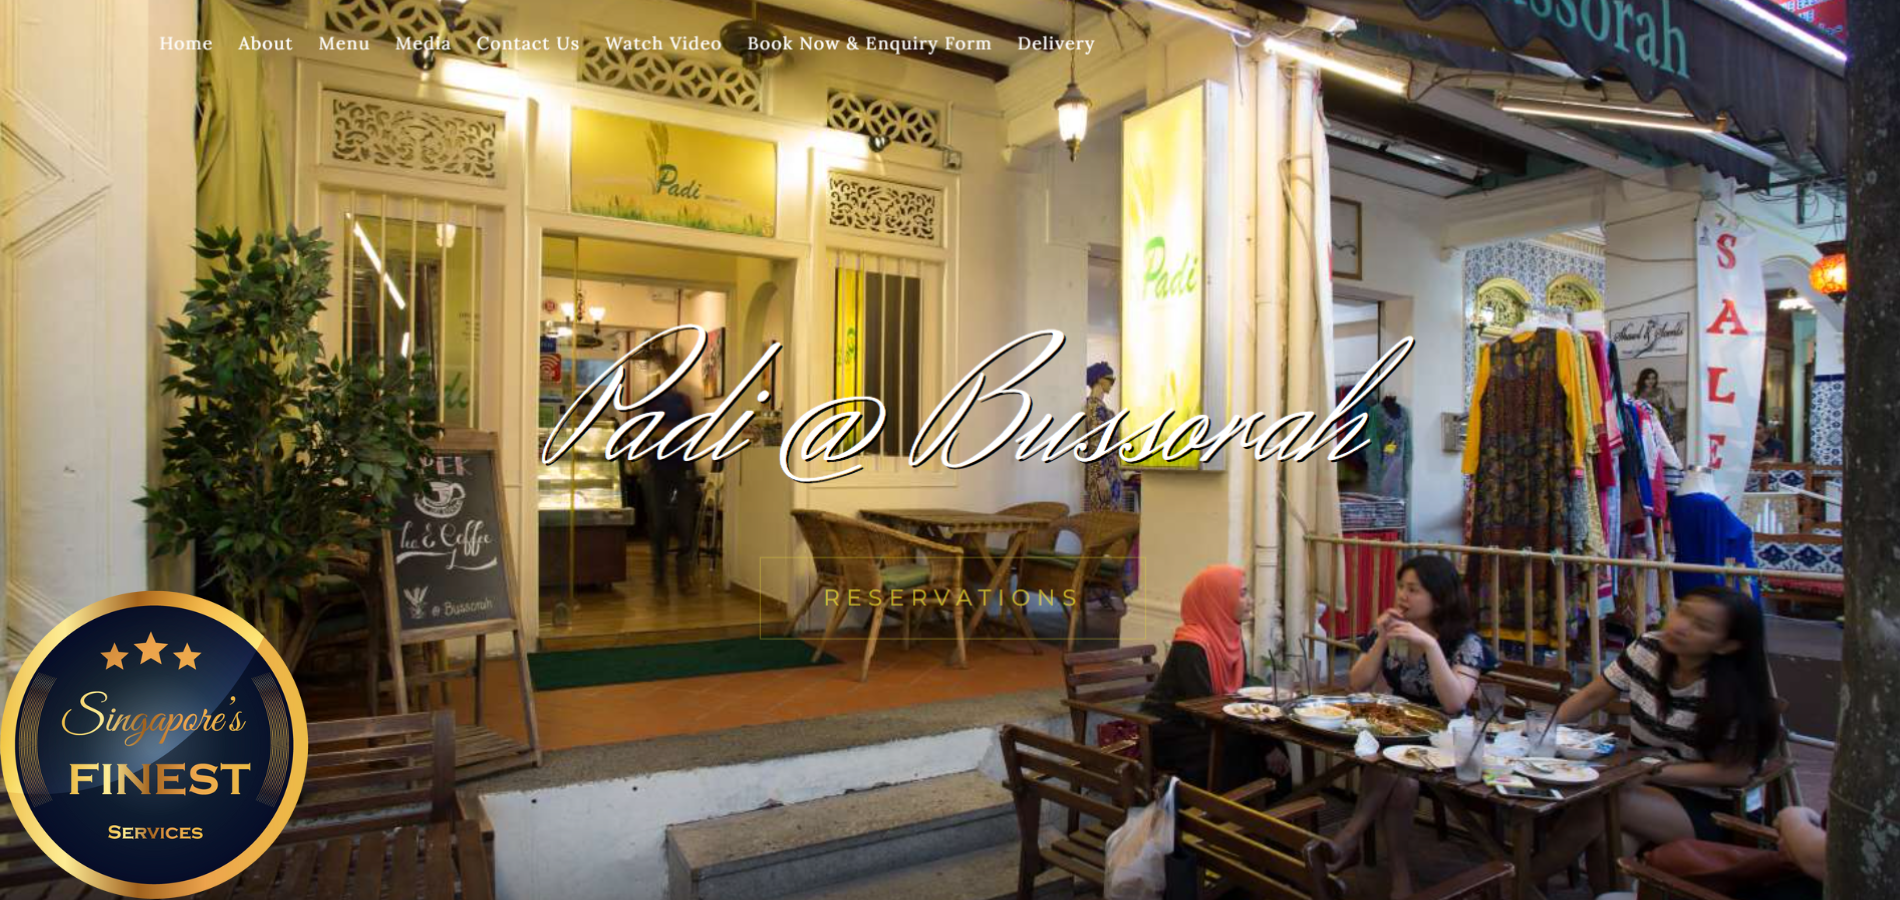 The Finest Haji Lane Restaurants in Singapore